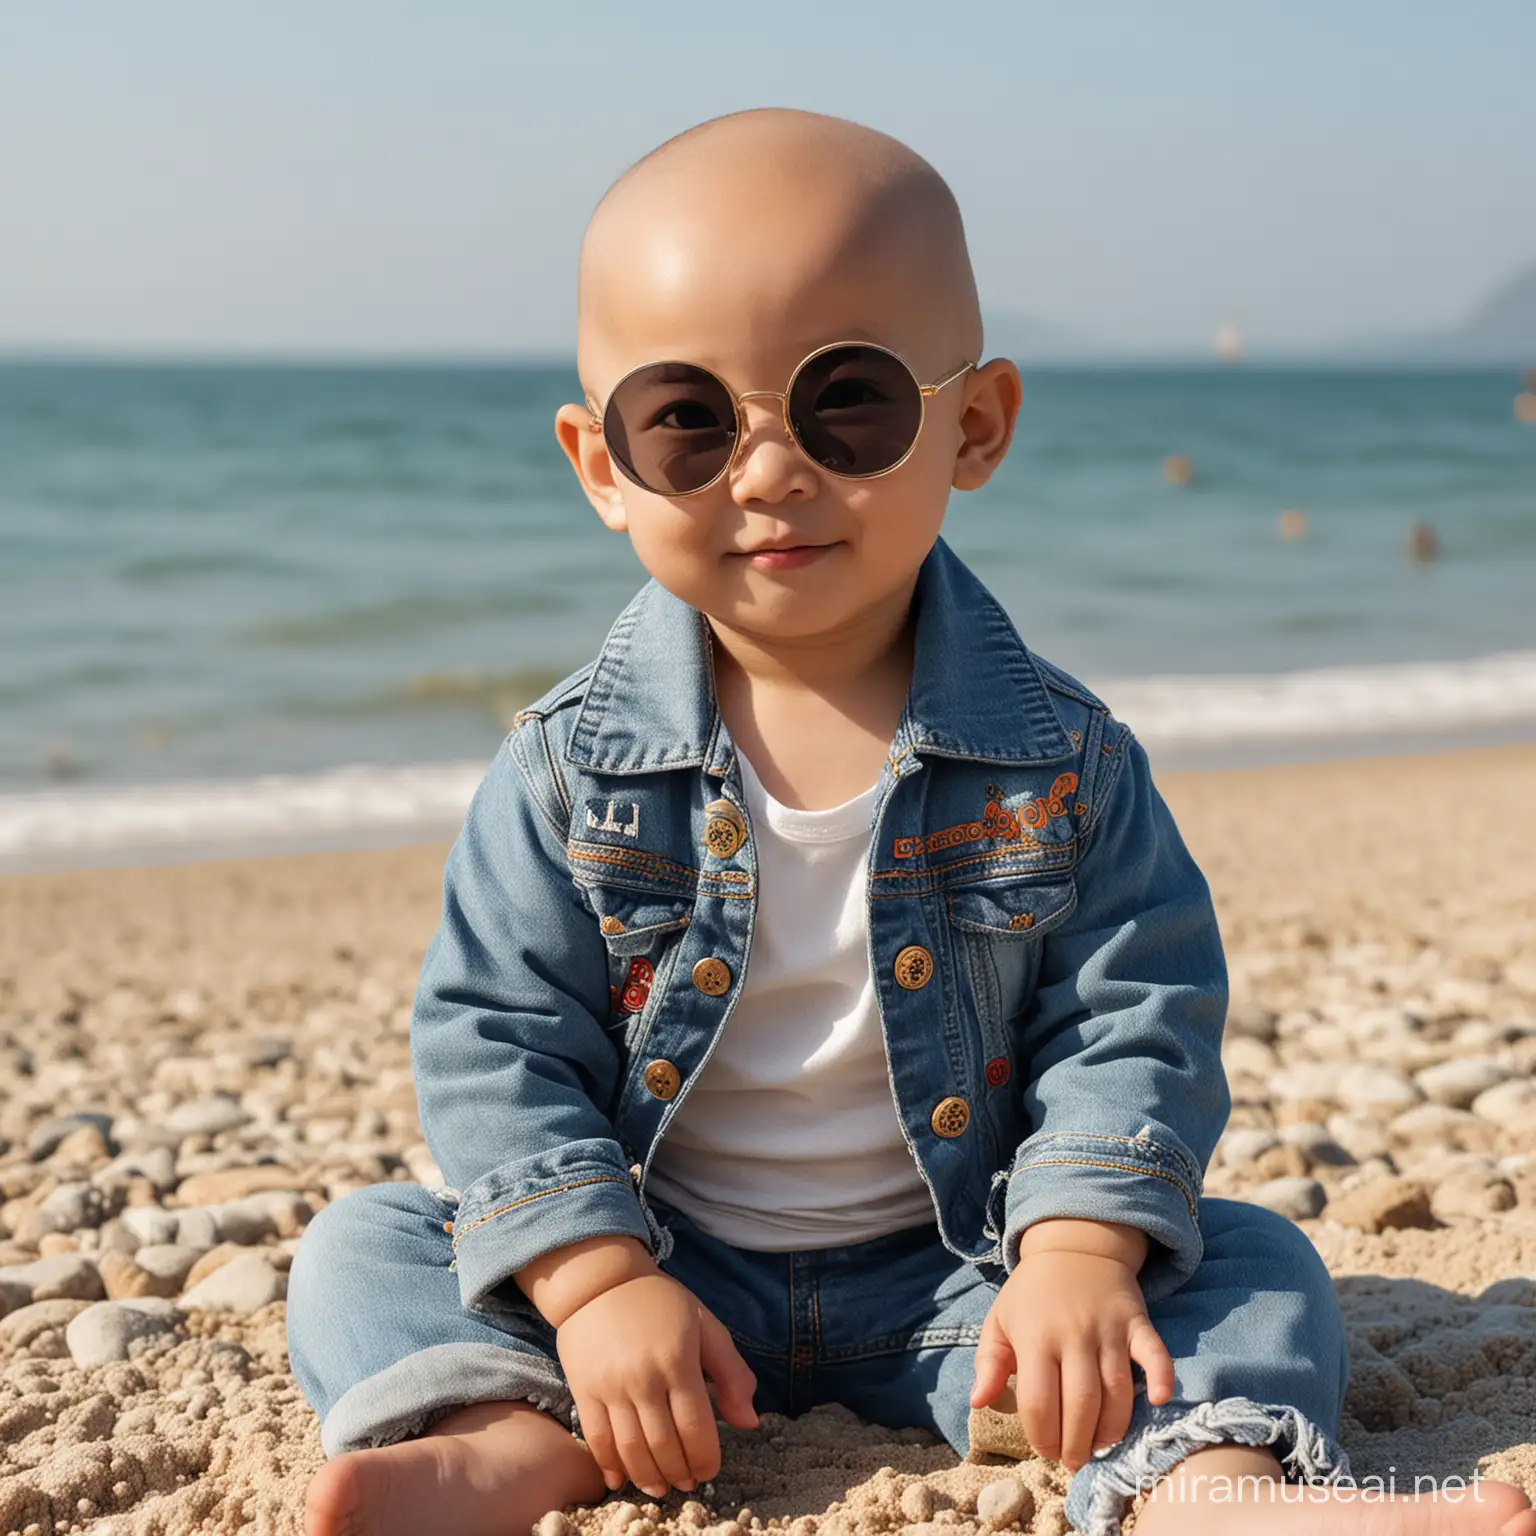 seorang bocah asia umur 3 tahun botak memakai kaca mata hitam bulat boboho,jaket jeans dan celana jeans sedang duduk di tepi pantai pagi hari,dan sangat detail, sangat jernih, resolusi tinggi, penuh warna.